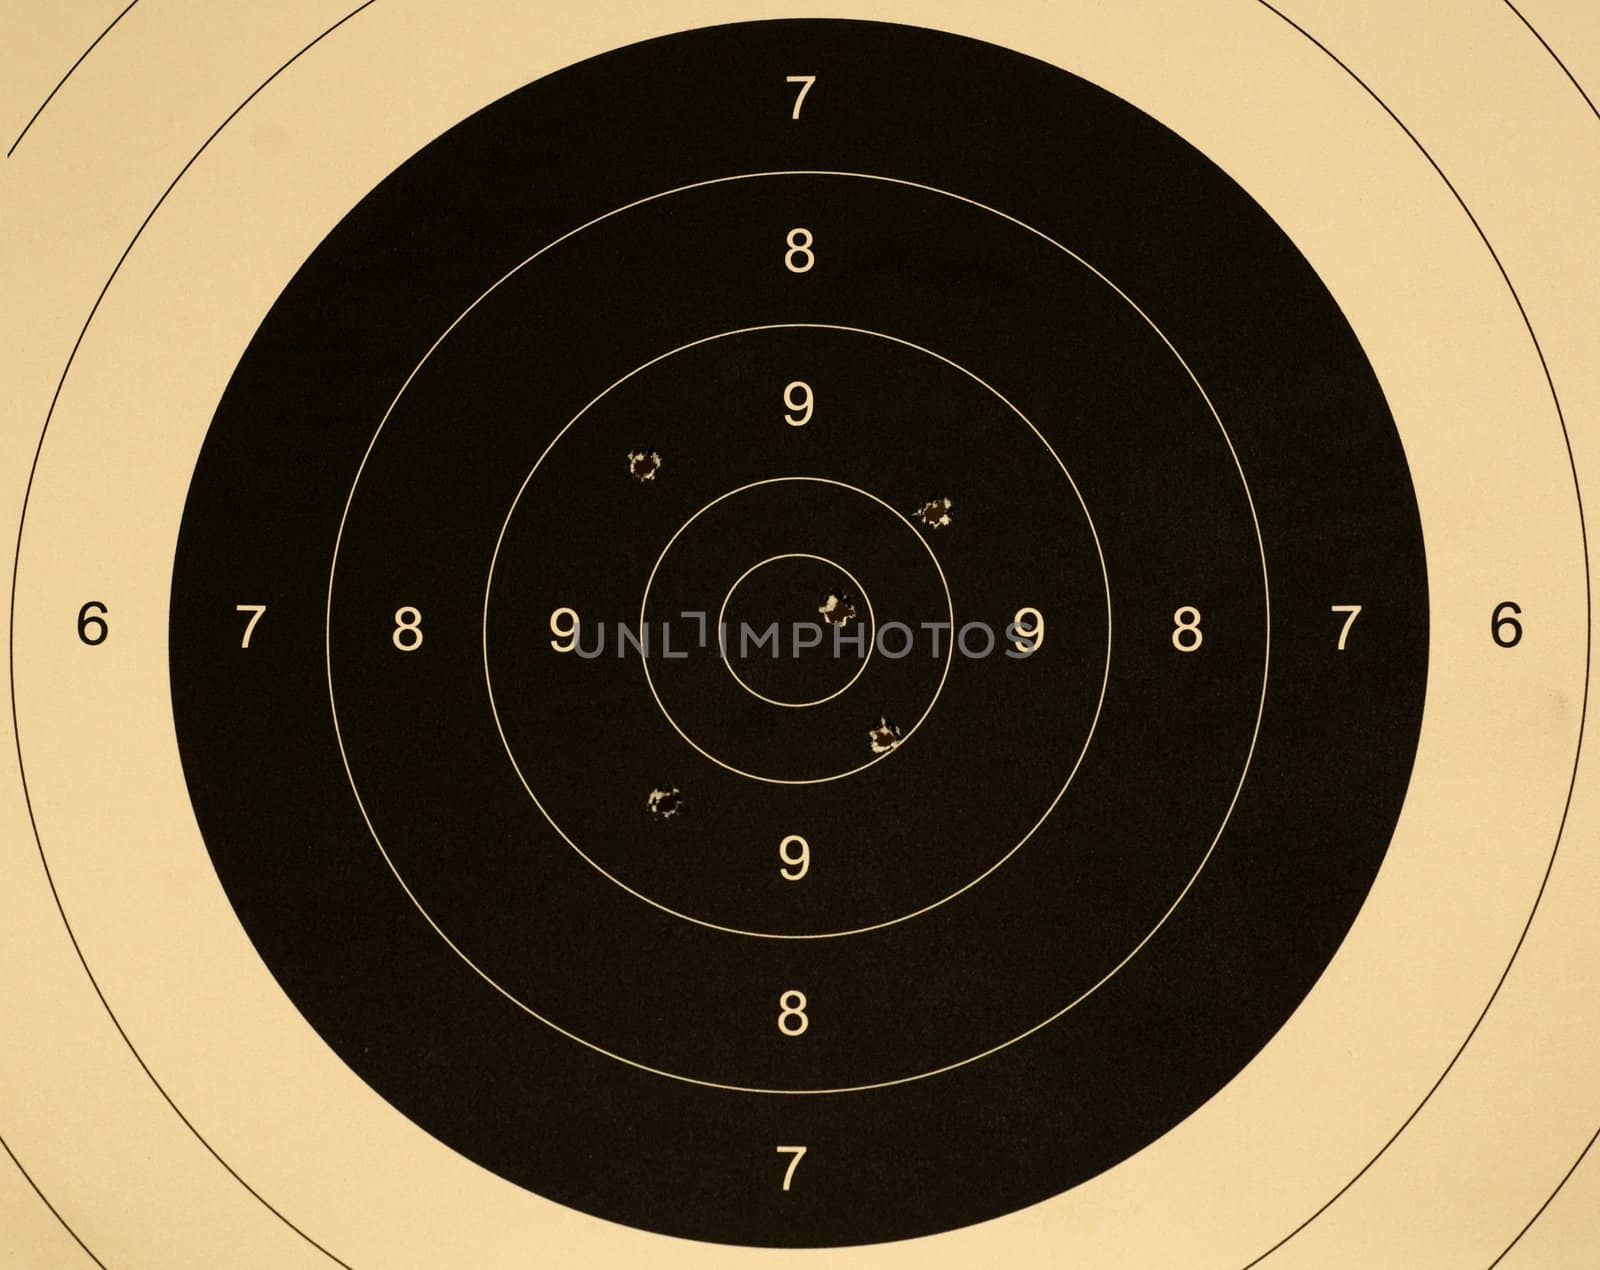 Pistol 25 meter target with 5 holes, 47 scored